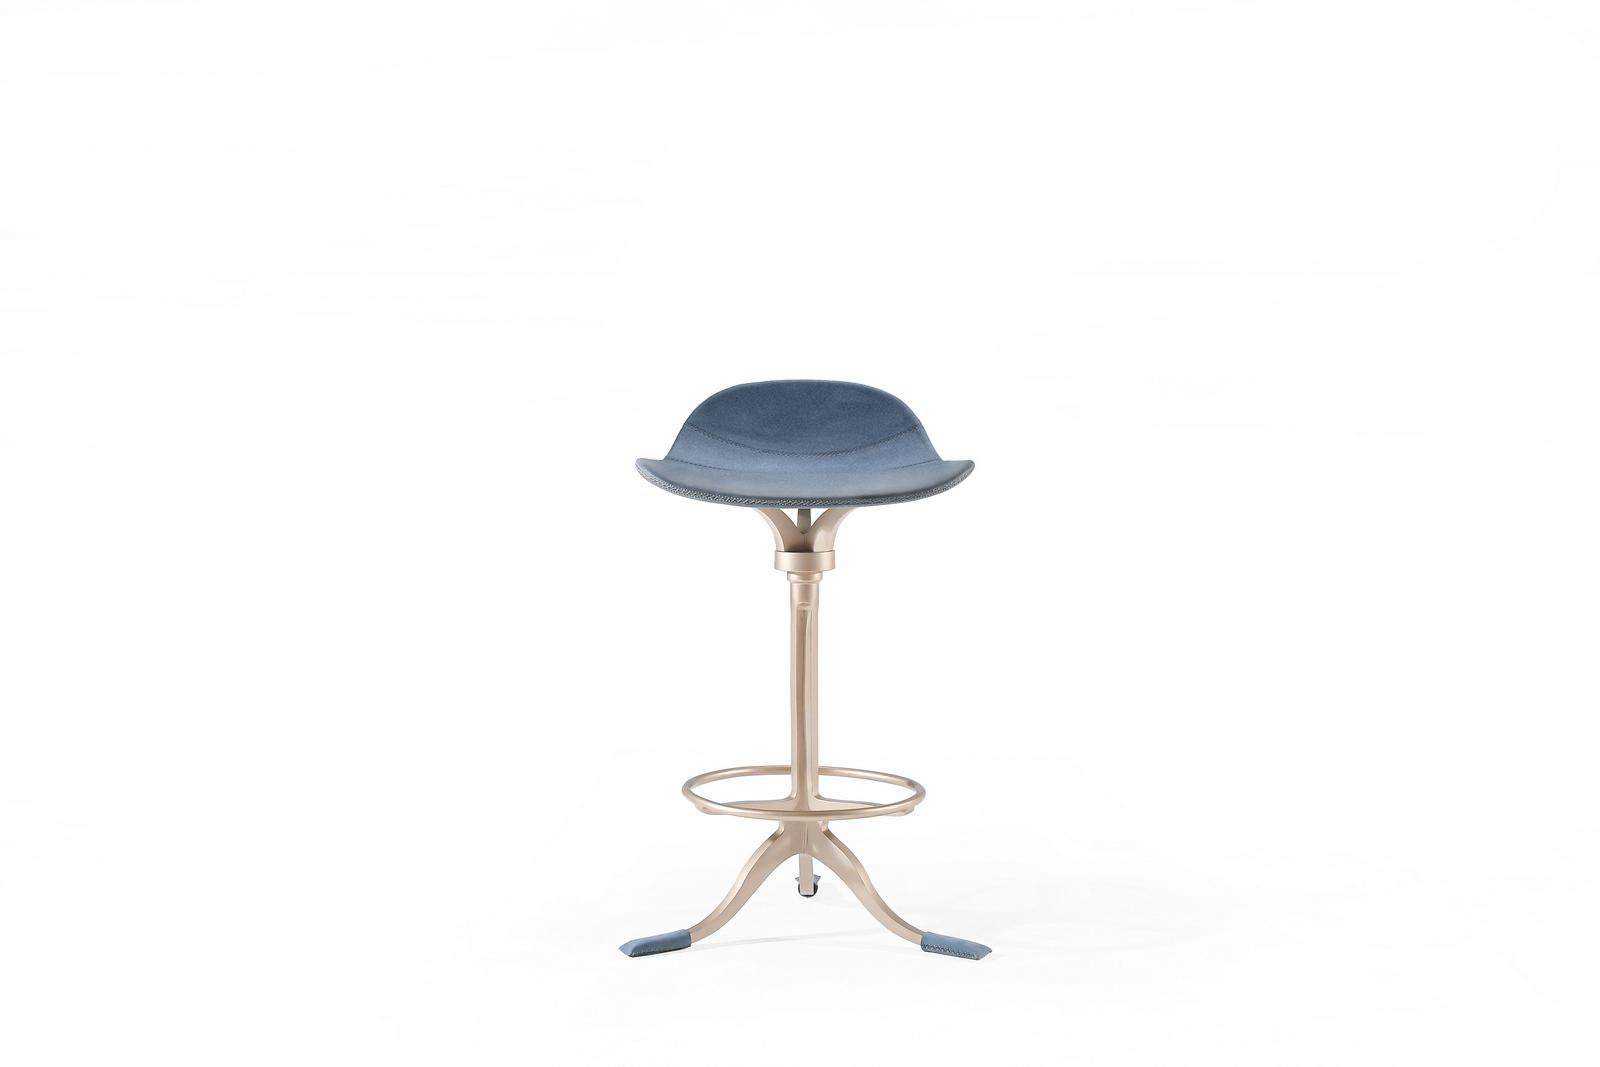 Model: PT483 counter-height stool + swivel + footrest ring
Seat: leather
Seat color: Paris Plage (Blue)
Base: PT483 sand cast brass
Base finish: Golden sand
Dimensions: W 43 x D 52 x H 78 (seat height 65 cm)
W 16.92 x D 20.27 x H 30.71 (seat height